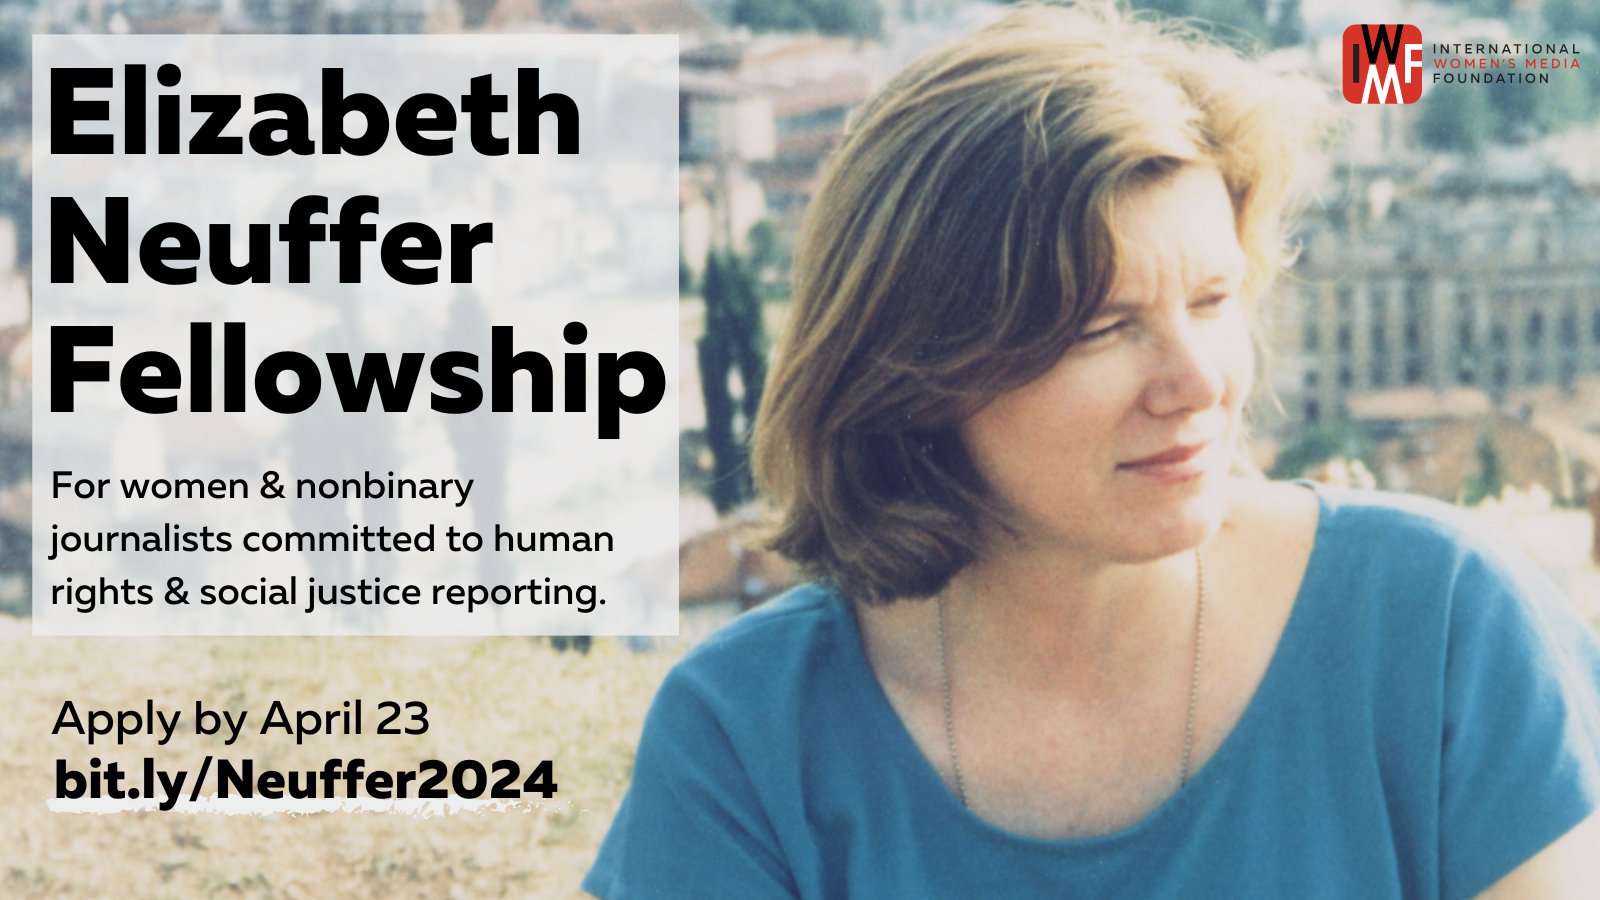 Elizabeth Neuffer Fellowship 2023 for Women Journalists